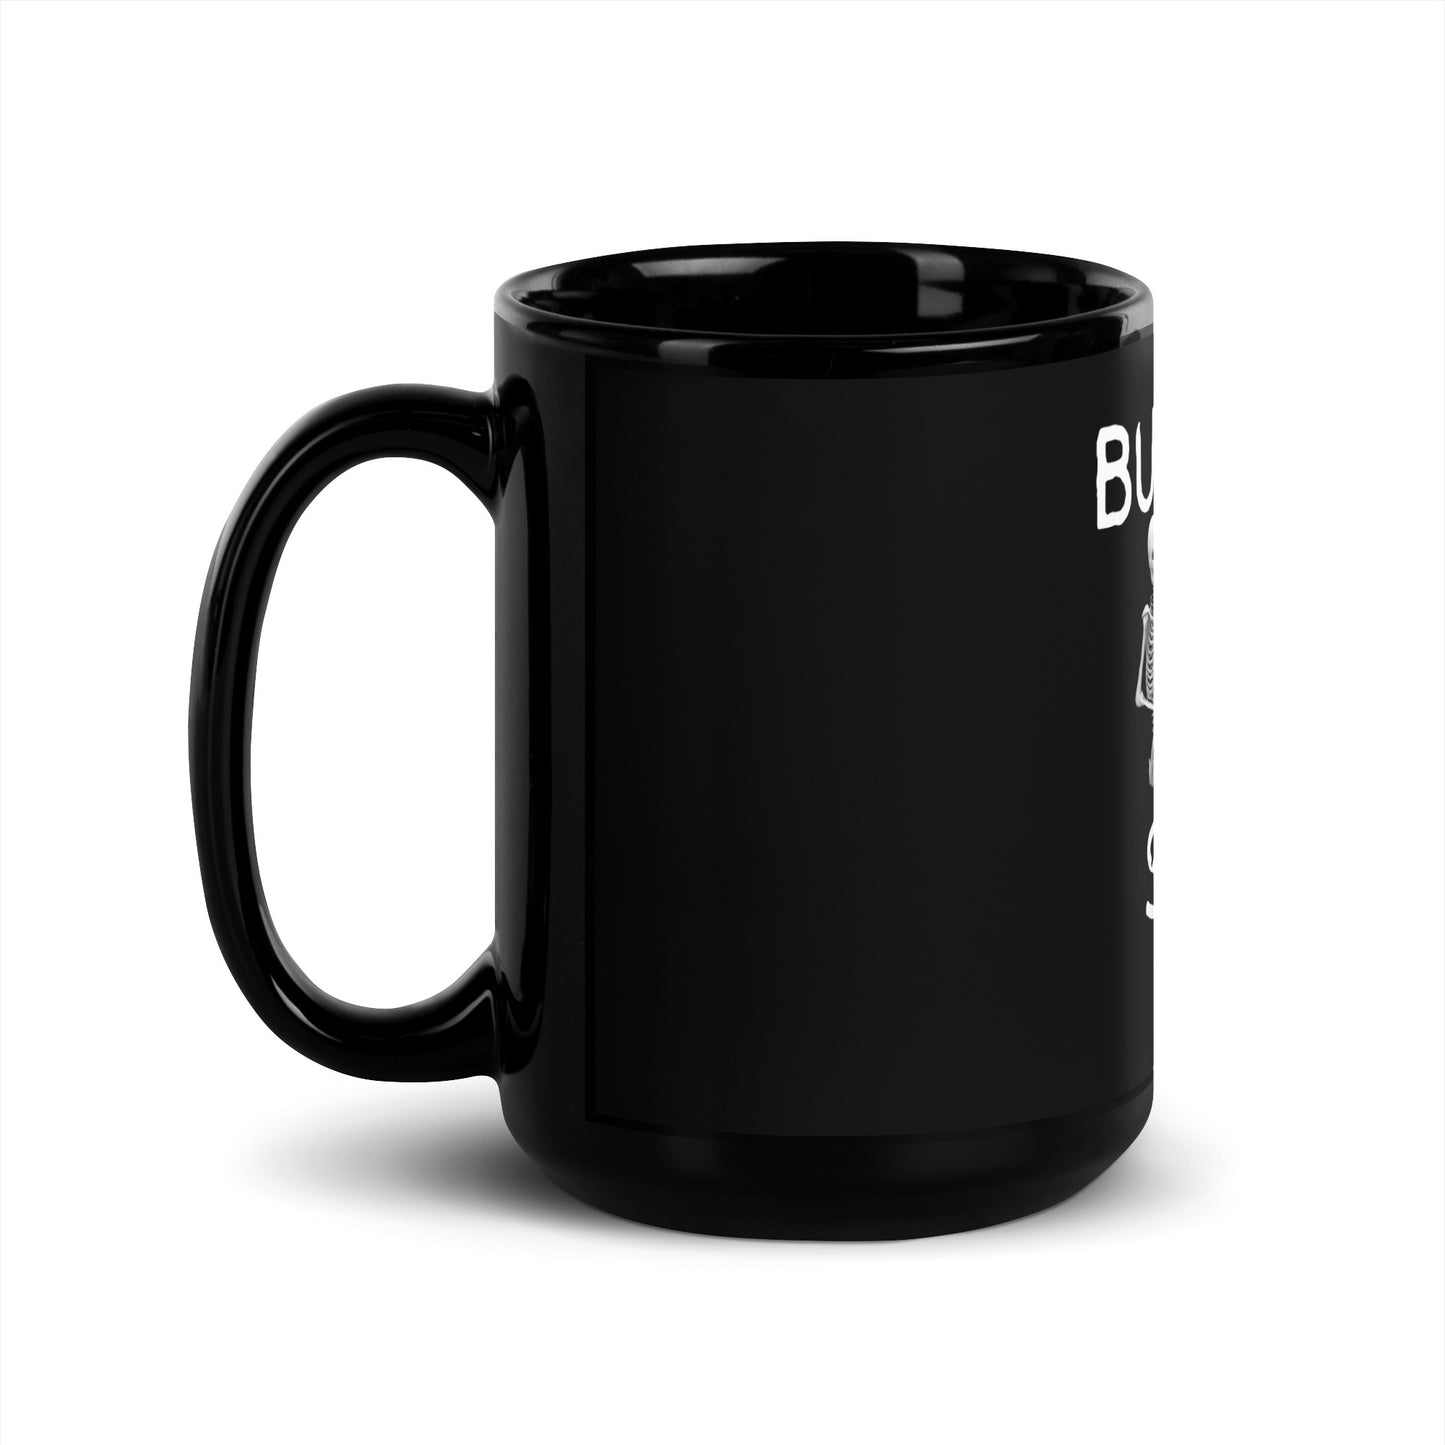 BUFFETS SUCK 2 Black Glossy Mug